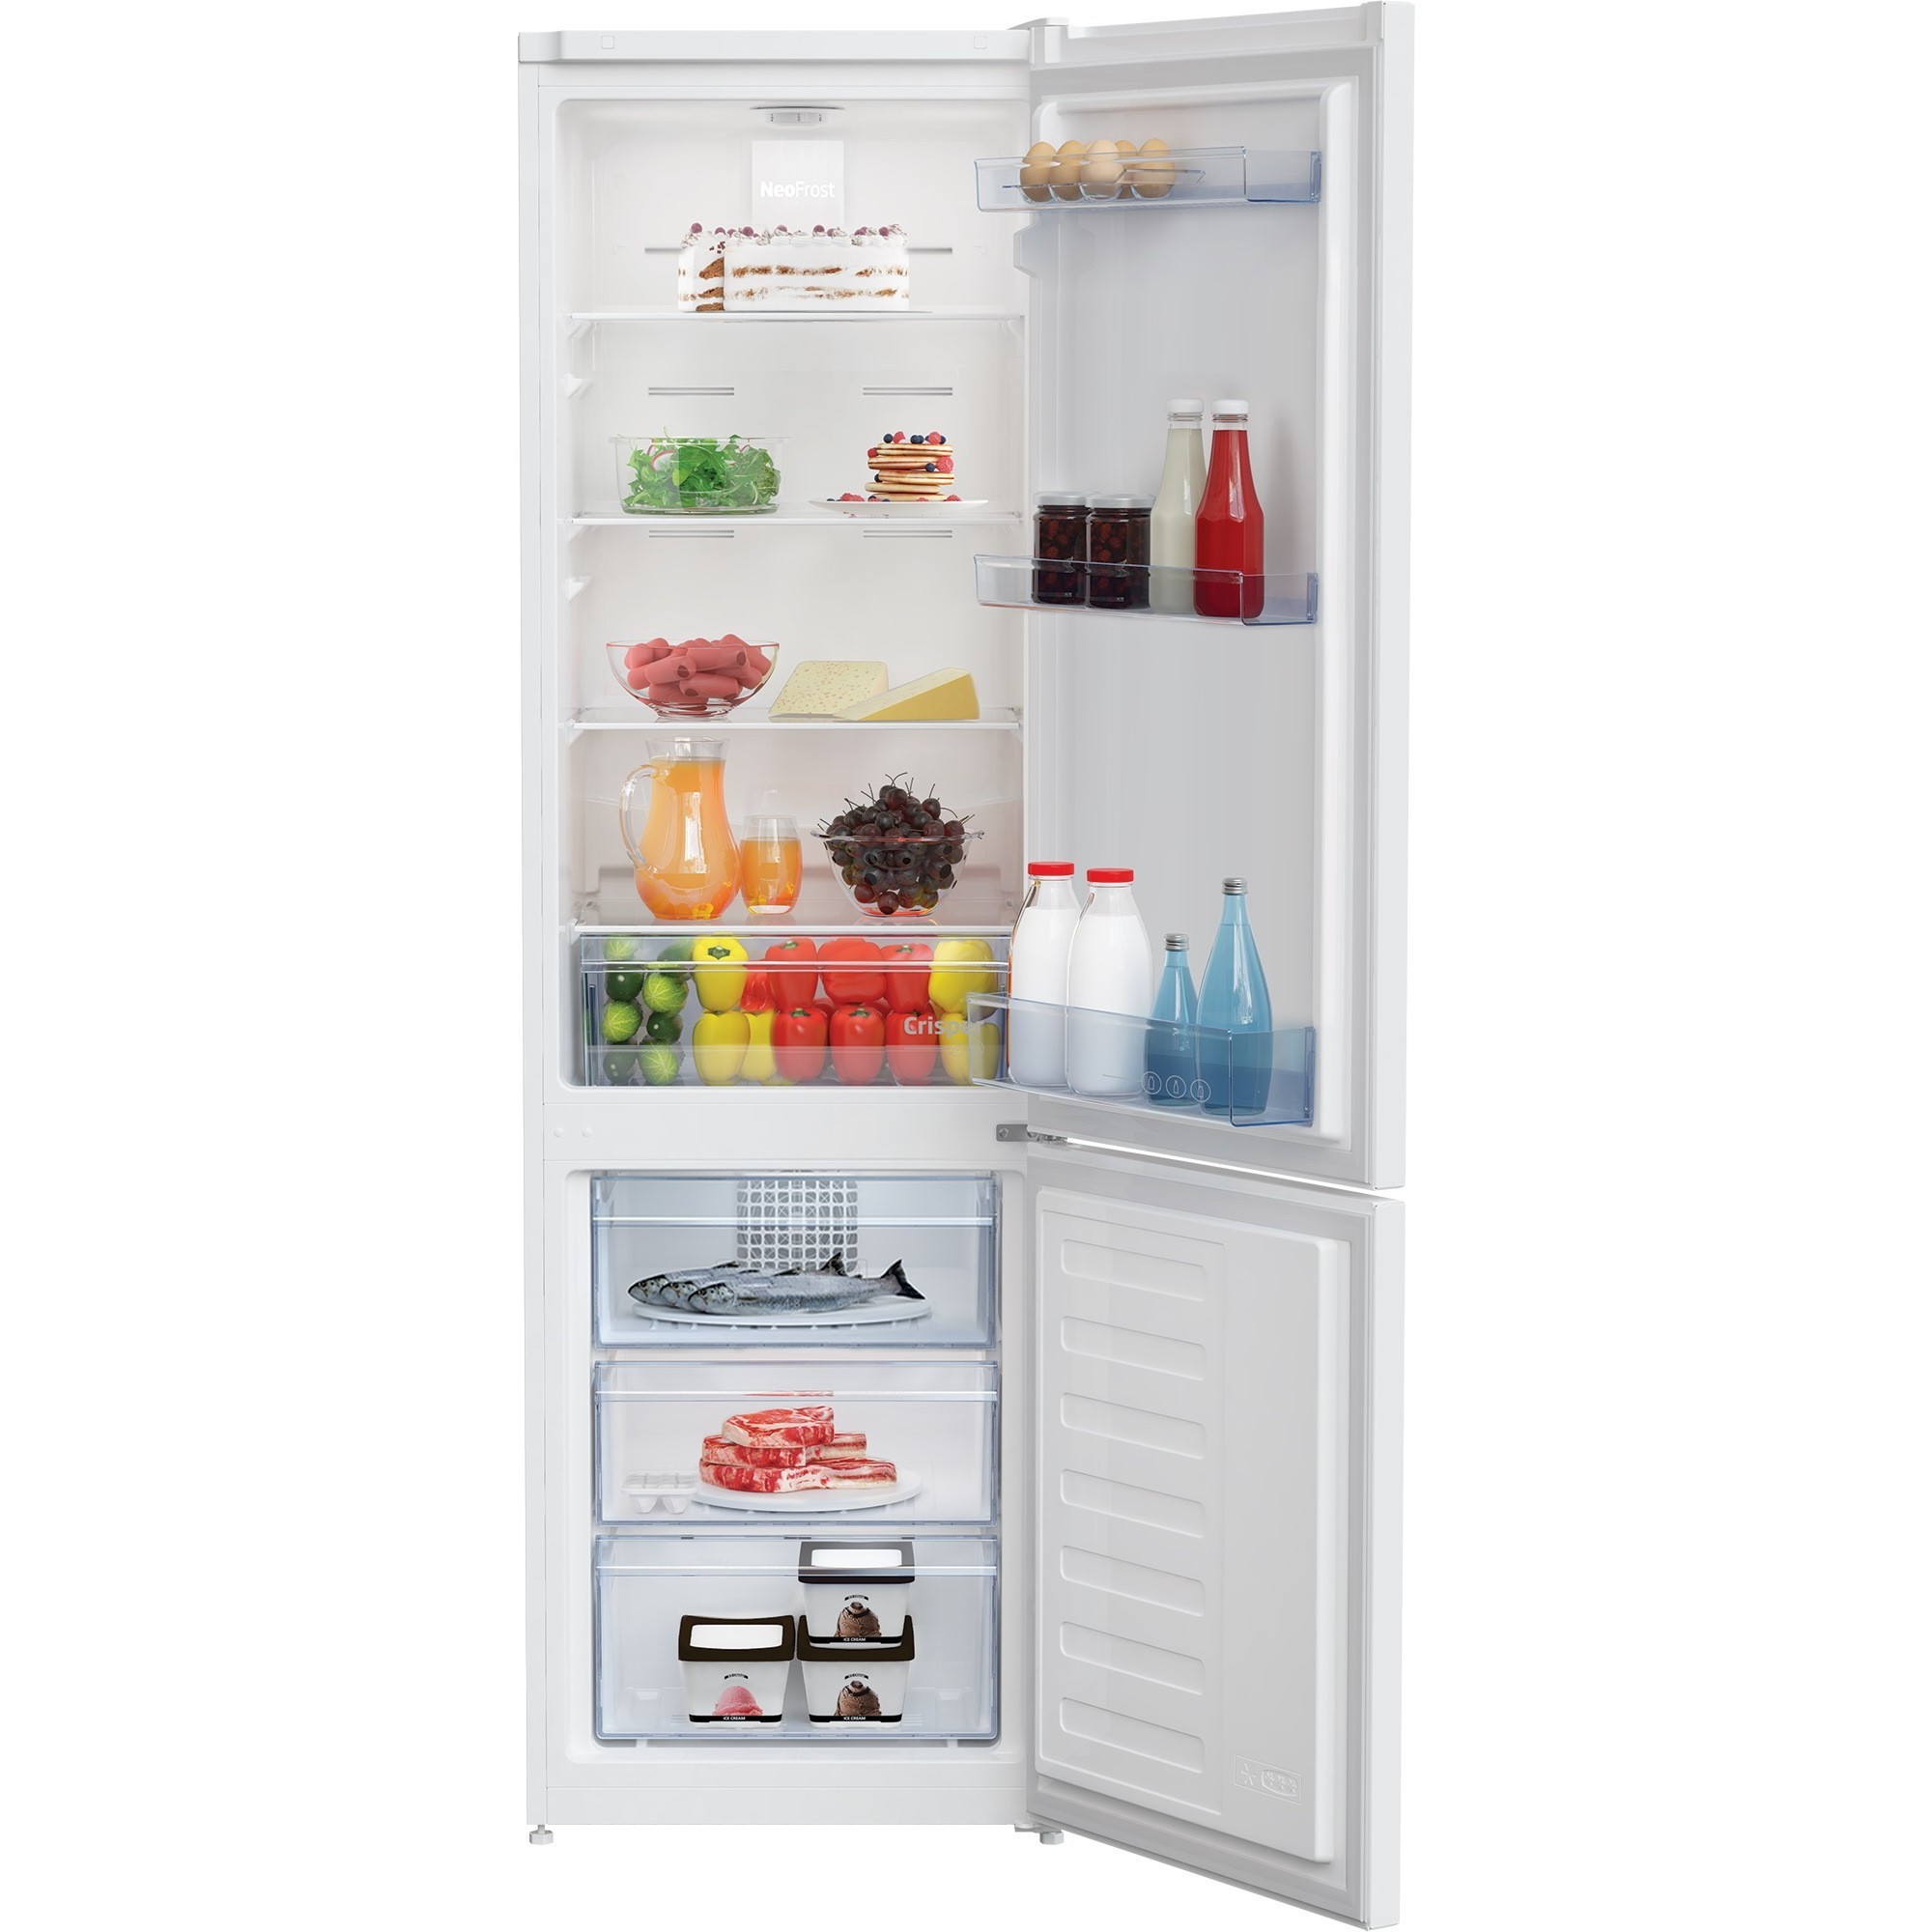 Холодильник Beko RCNA 305K30 SN